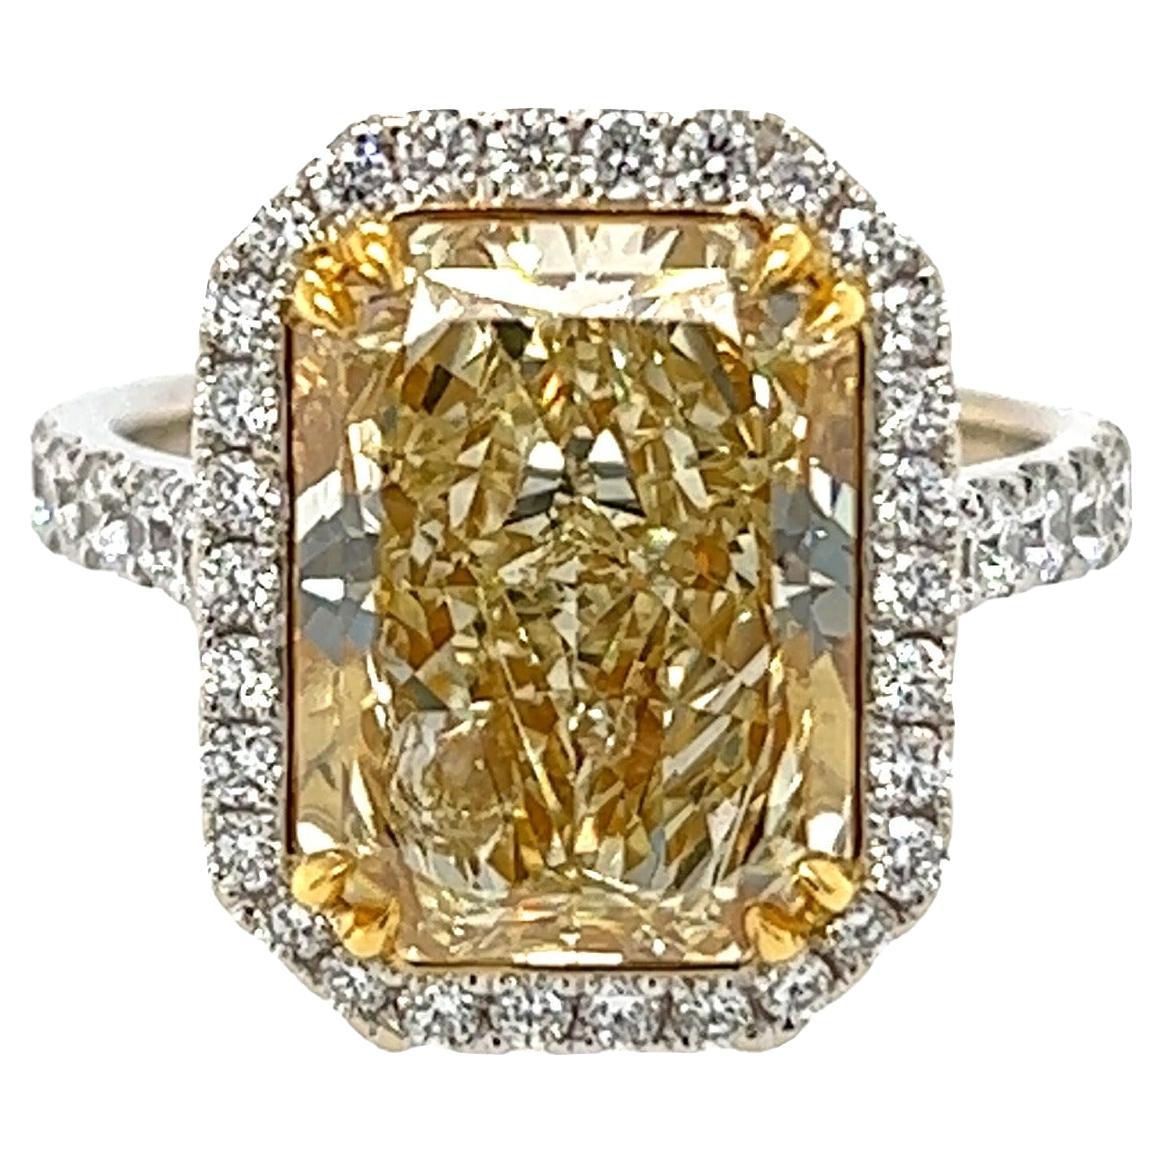 Verlobungsring mit 6,54 Karat strahlendem hellgelbem GIA-Diamant von Rosenberg